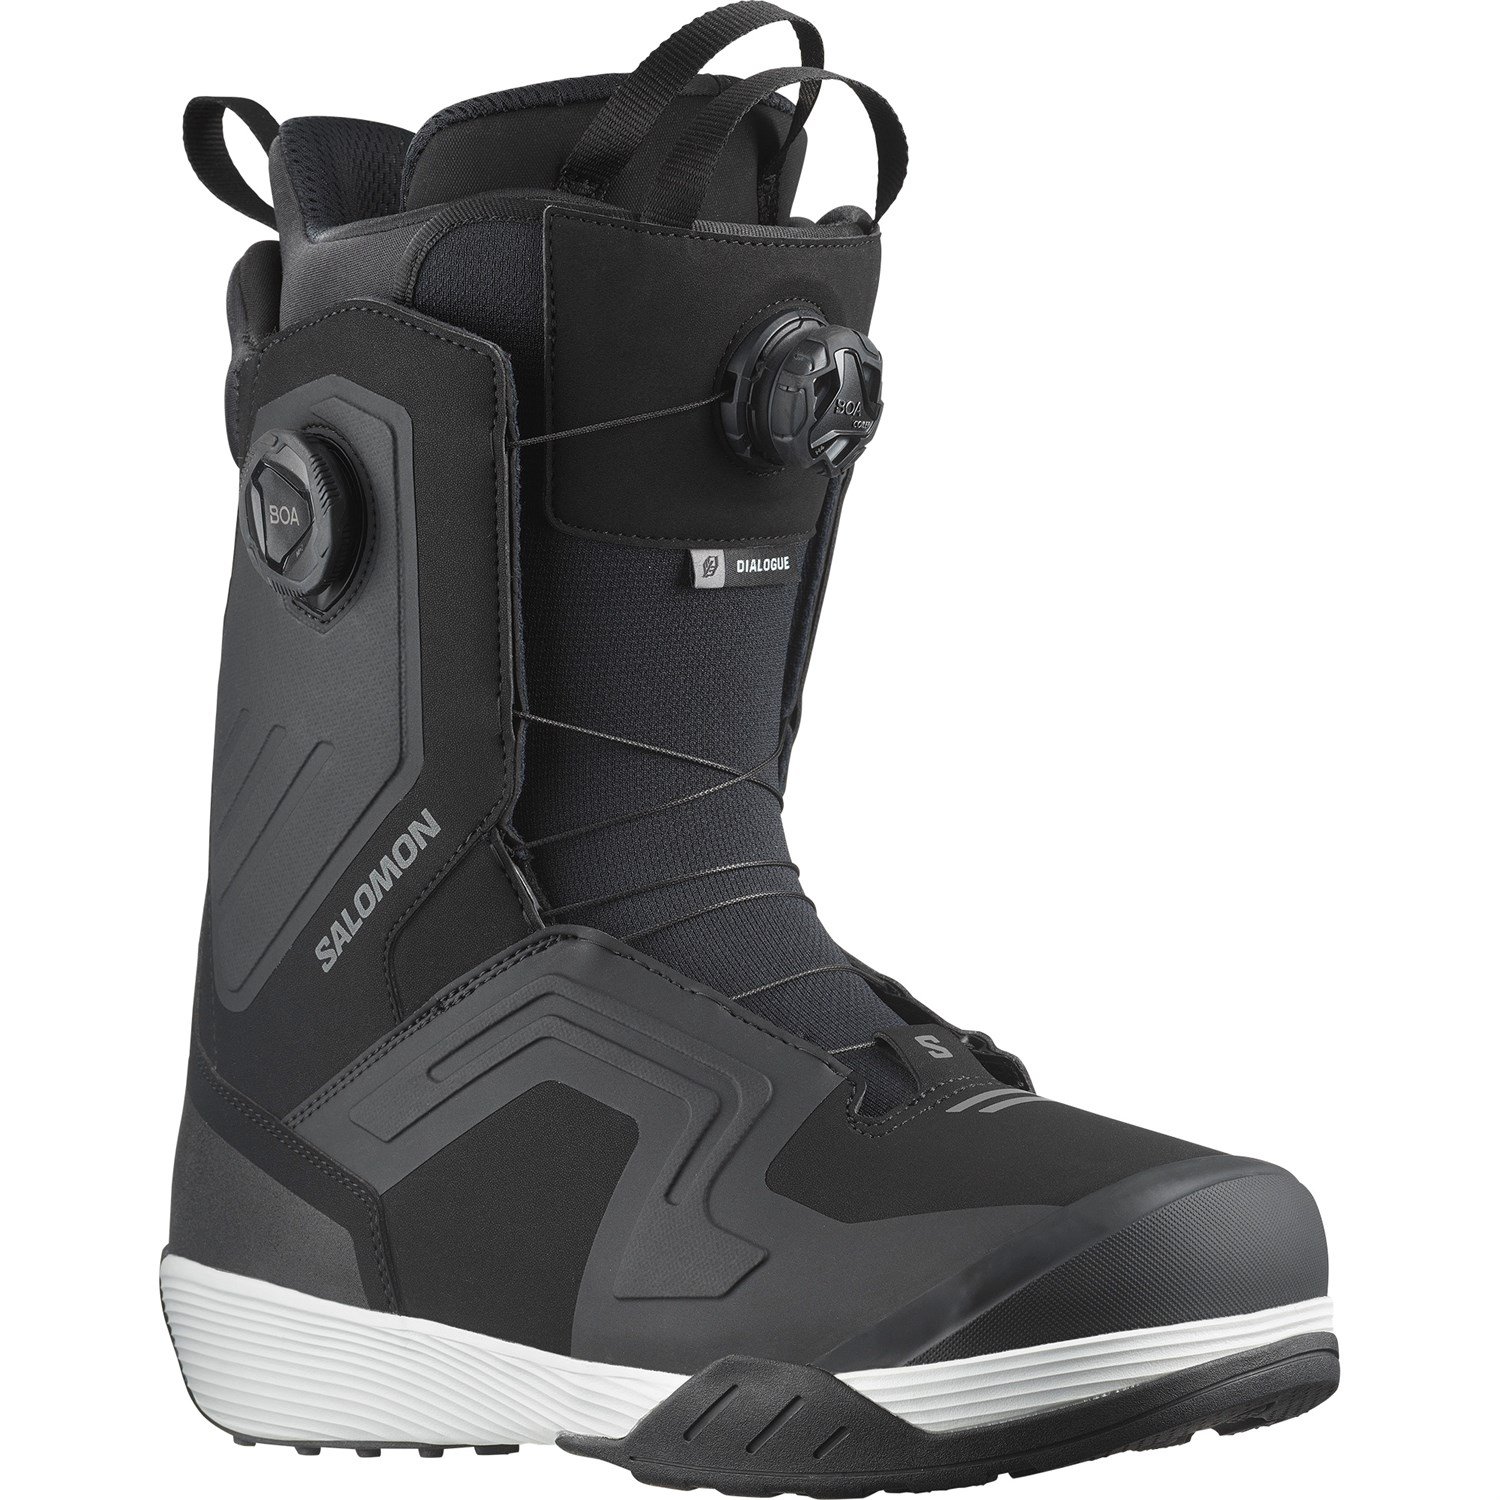 Salomon Dialogue Dual Boa Wide Snowboard Boots | evo